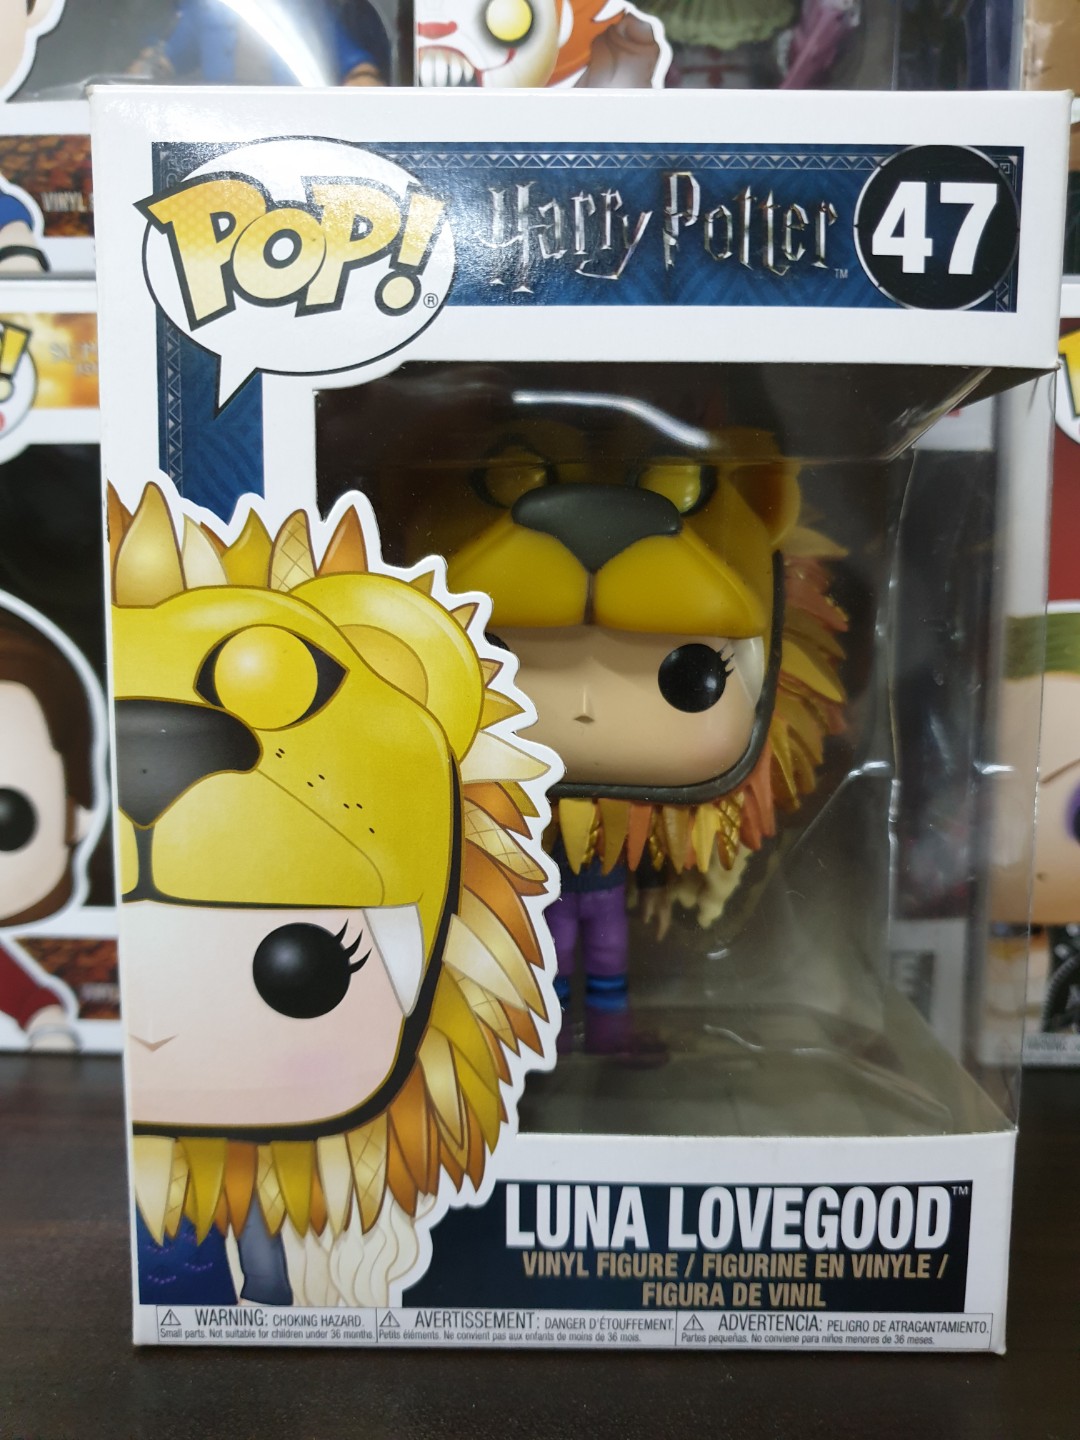 LUNA LOVEGOOD #47 - Harry Potter - FUNKO POP! Vinyl Figure - NEW